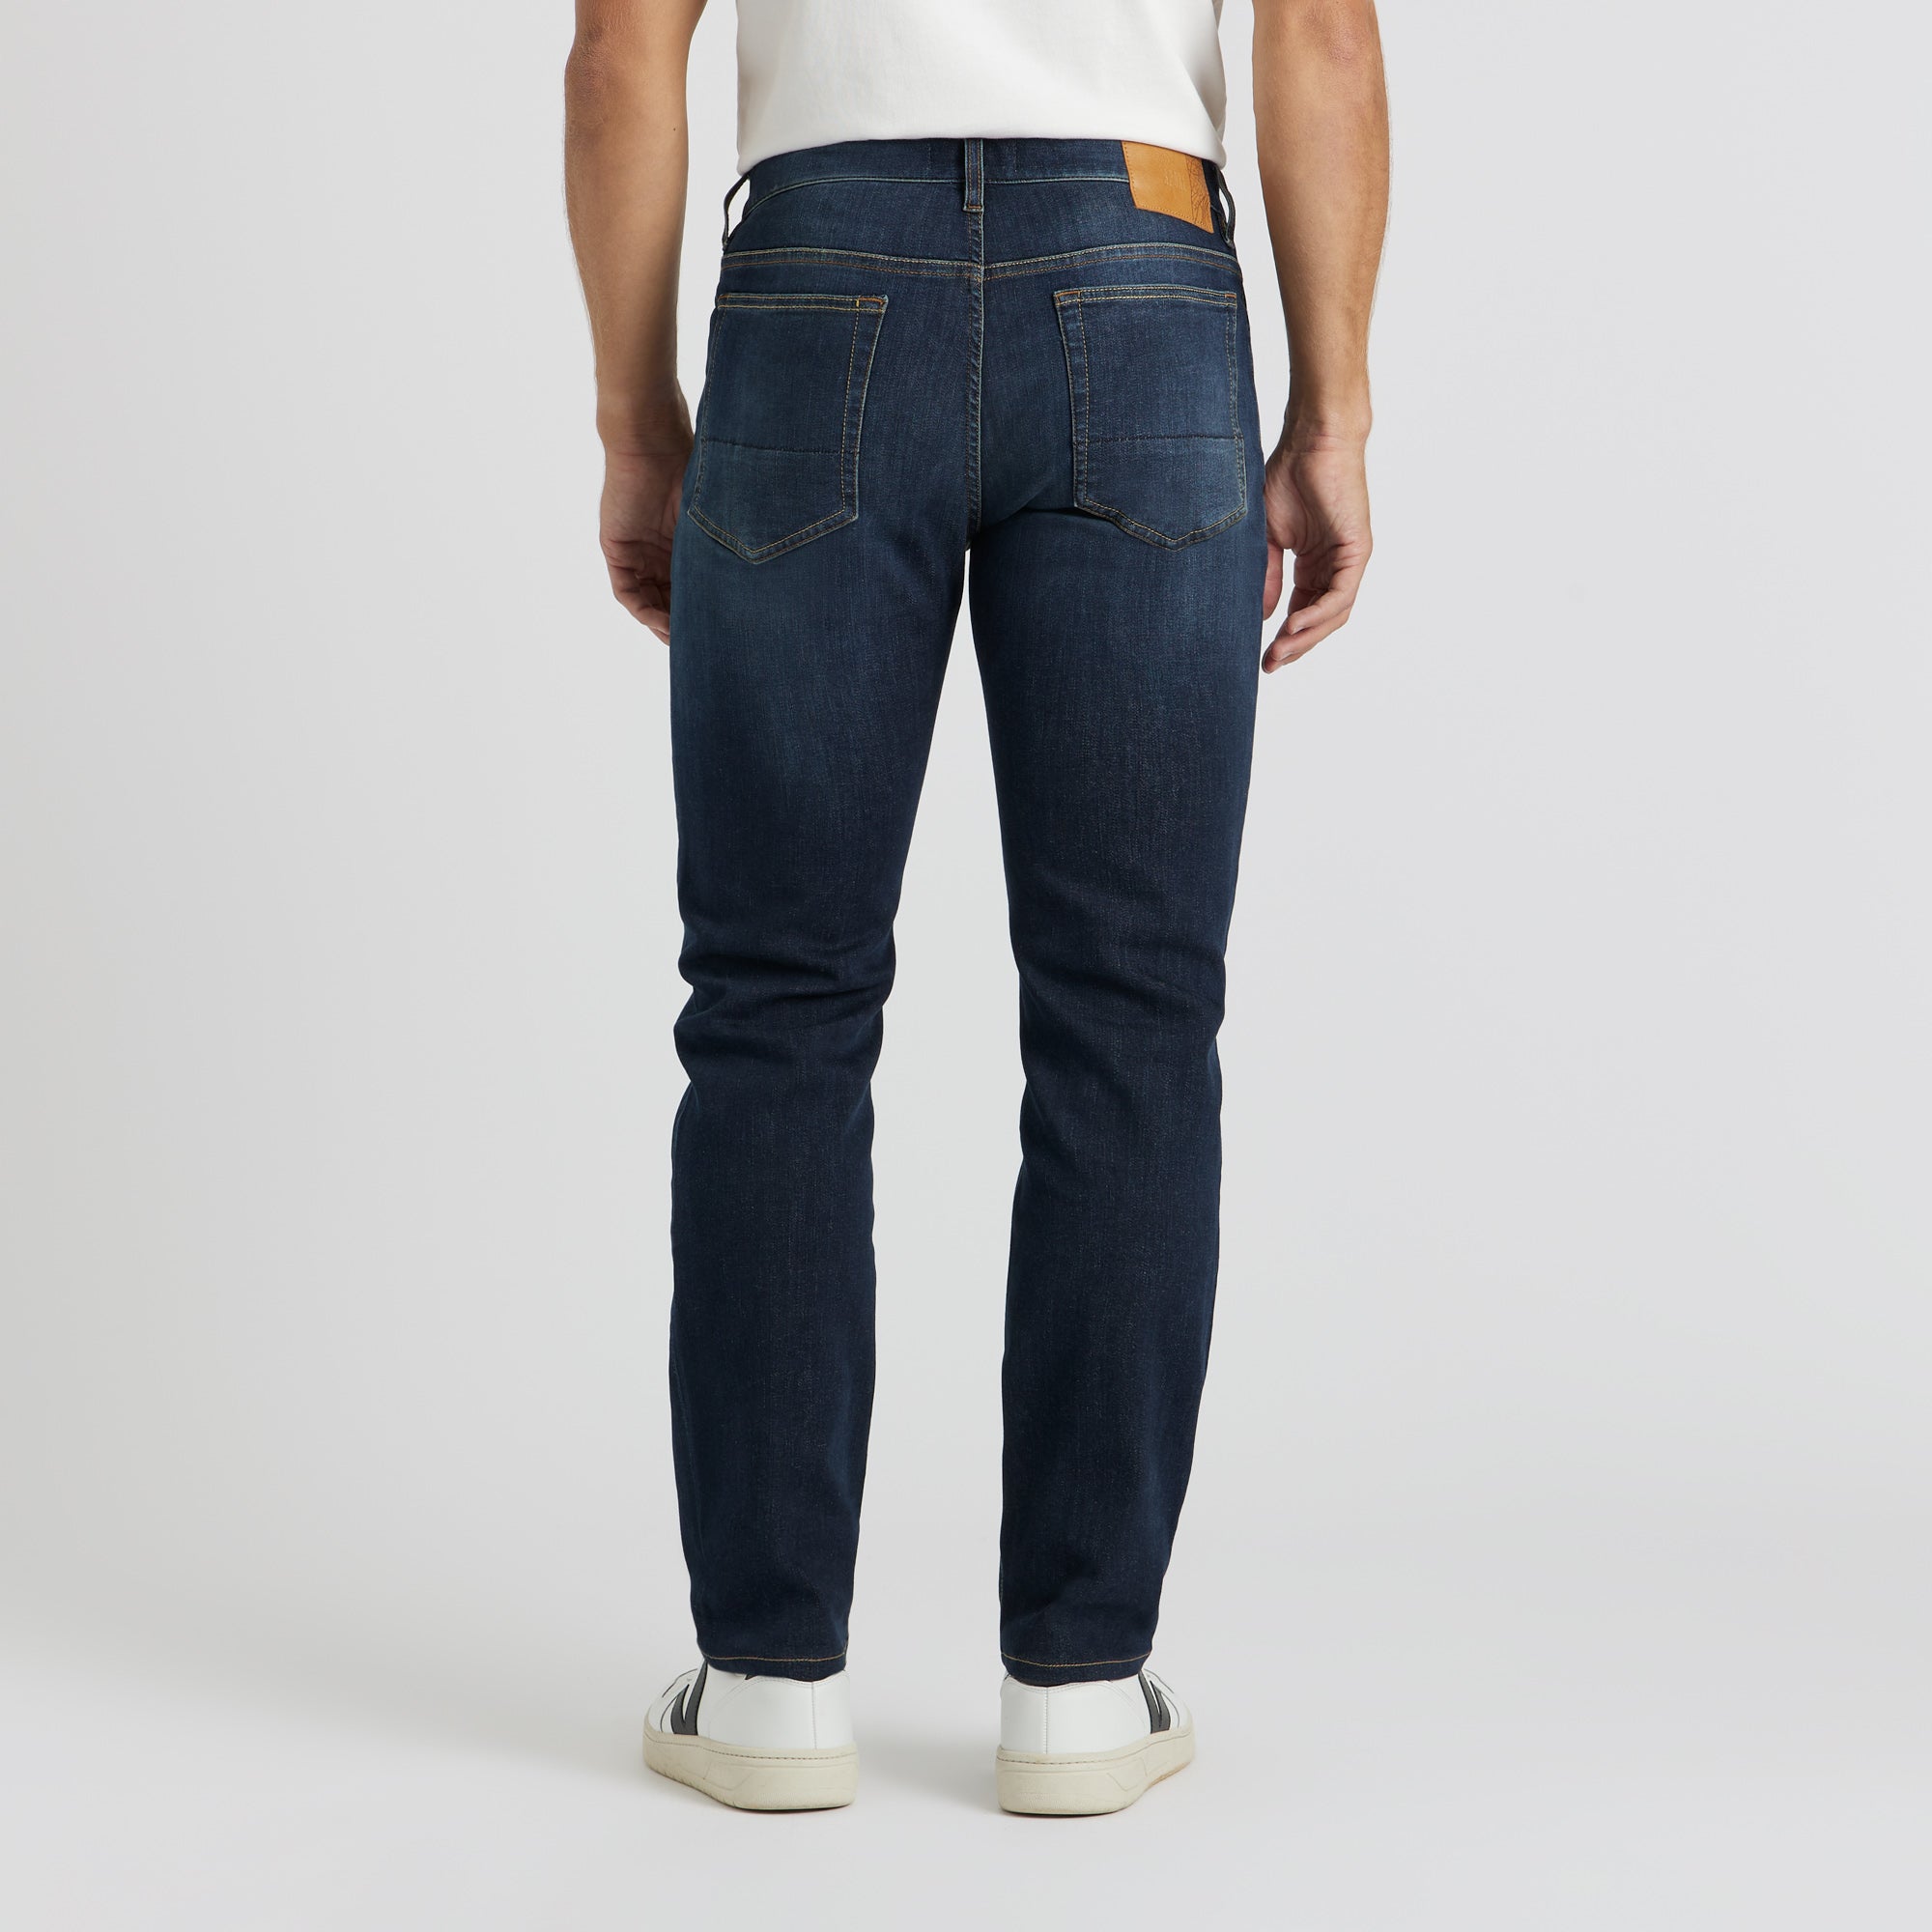 Men's GAP Slim Jeans